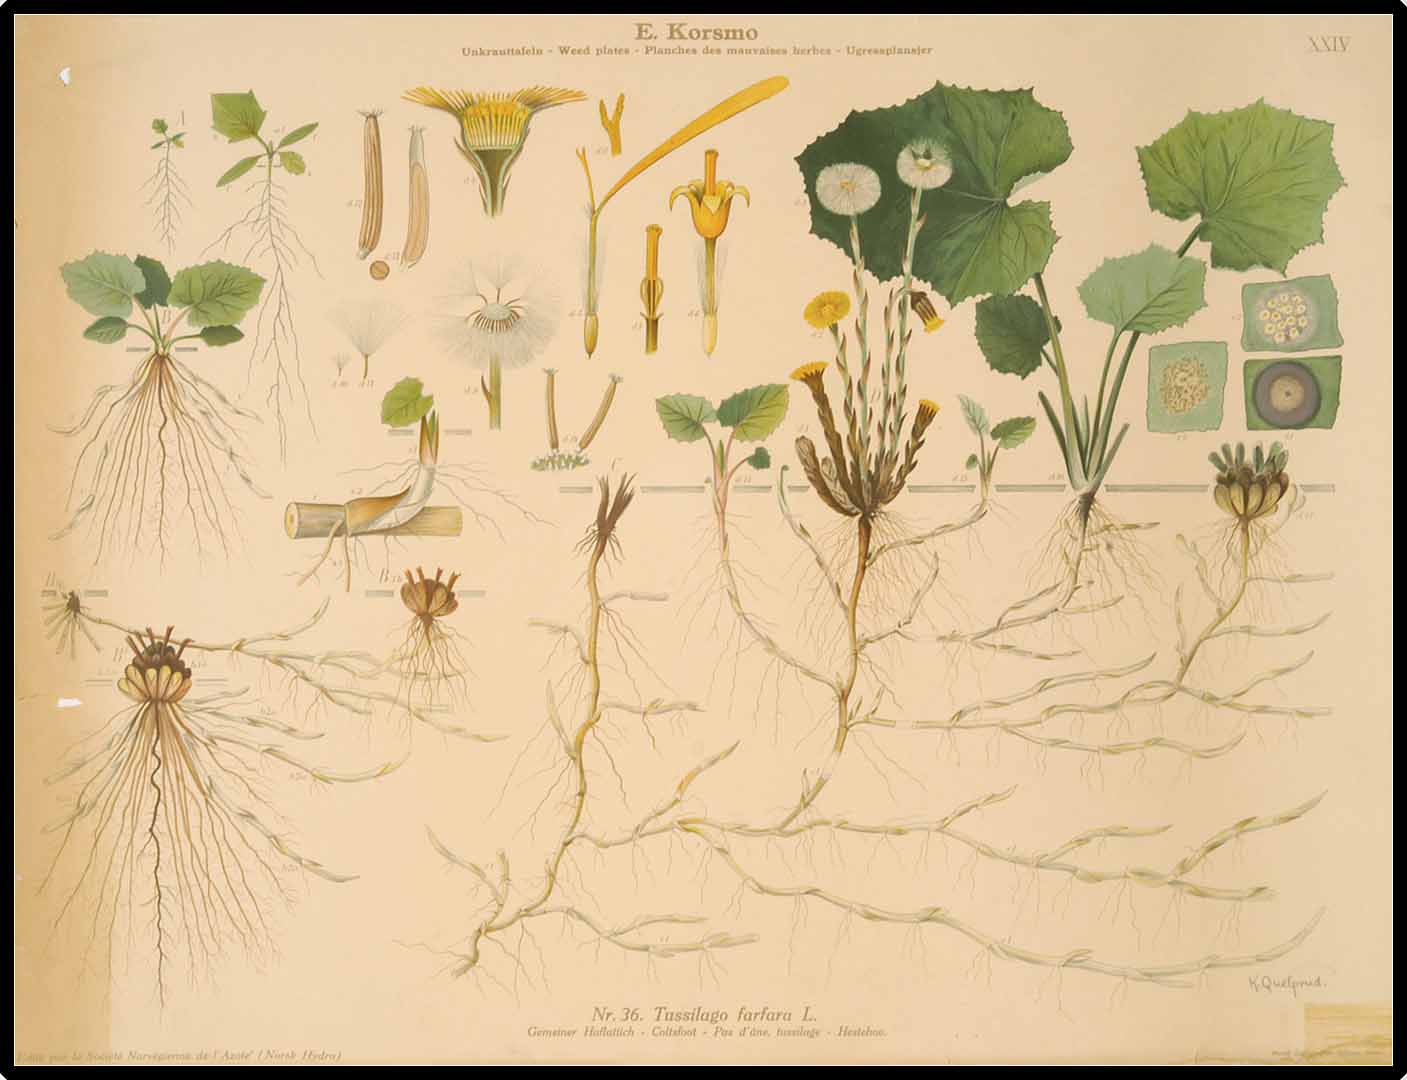 Illustration Tussilago farfara, Par Korsmo, E., Unkrauttaflen - Weed plates - Planches des mauvaises herbes - Ugressplansjer (1934-1938)  (1934) t. 24	f. 36 , via plantillustrations 